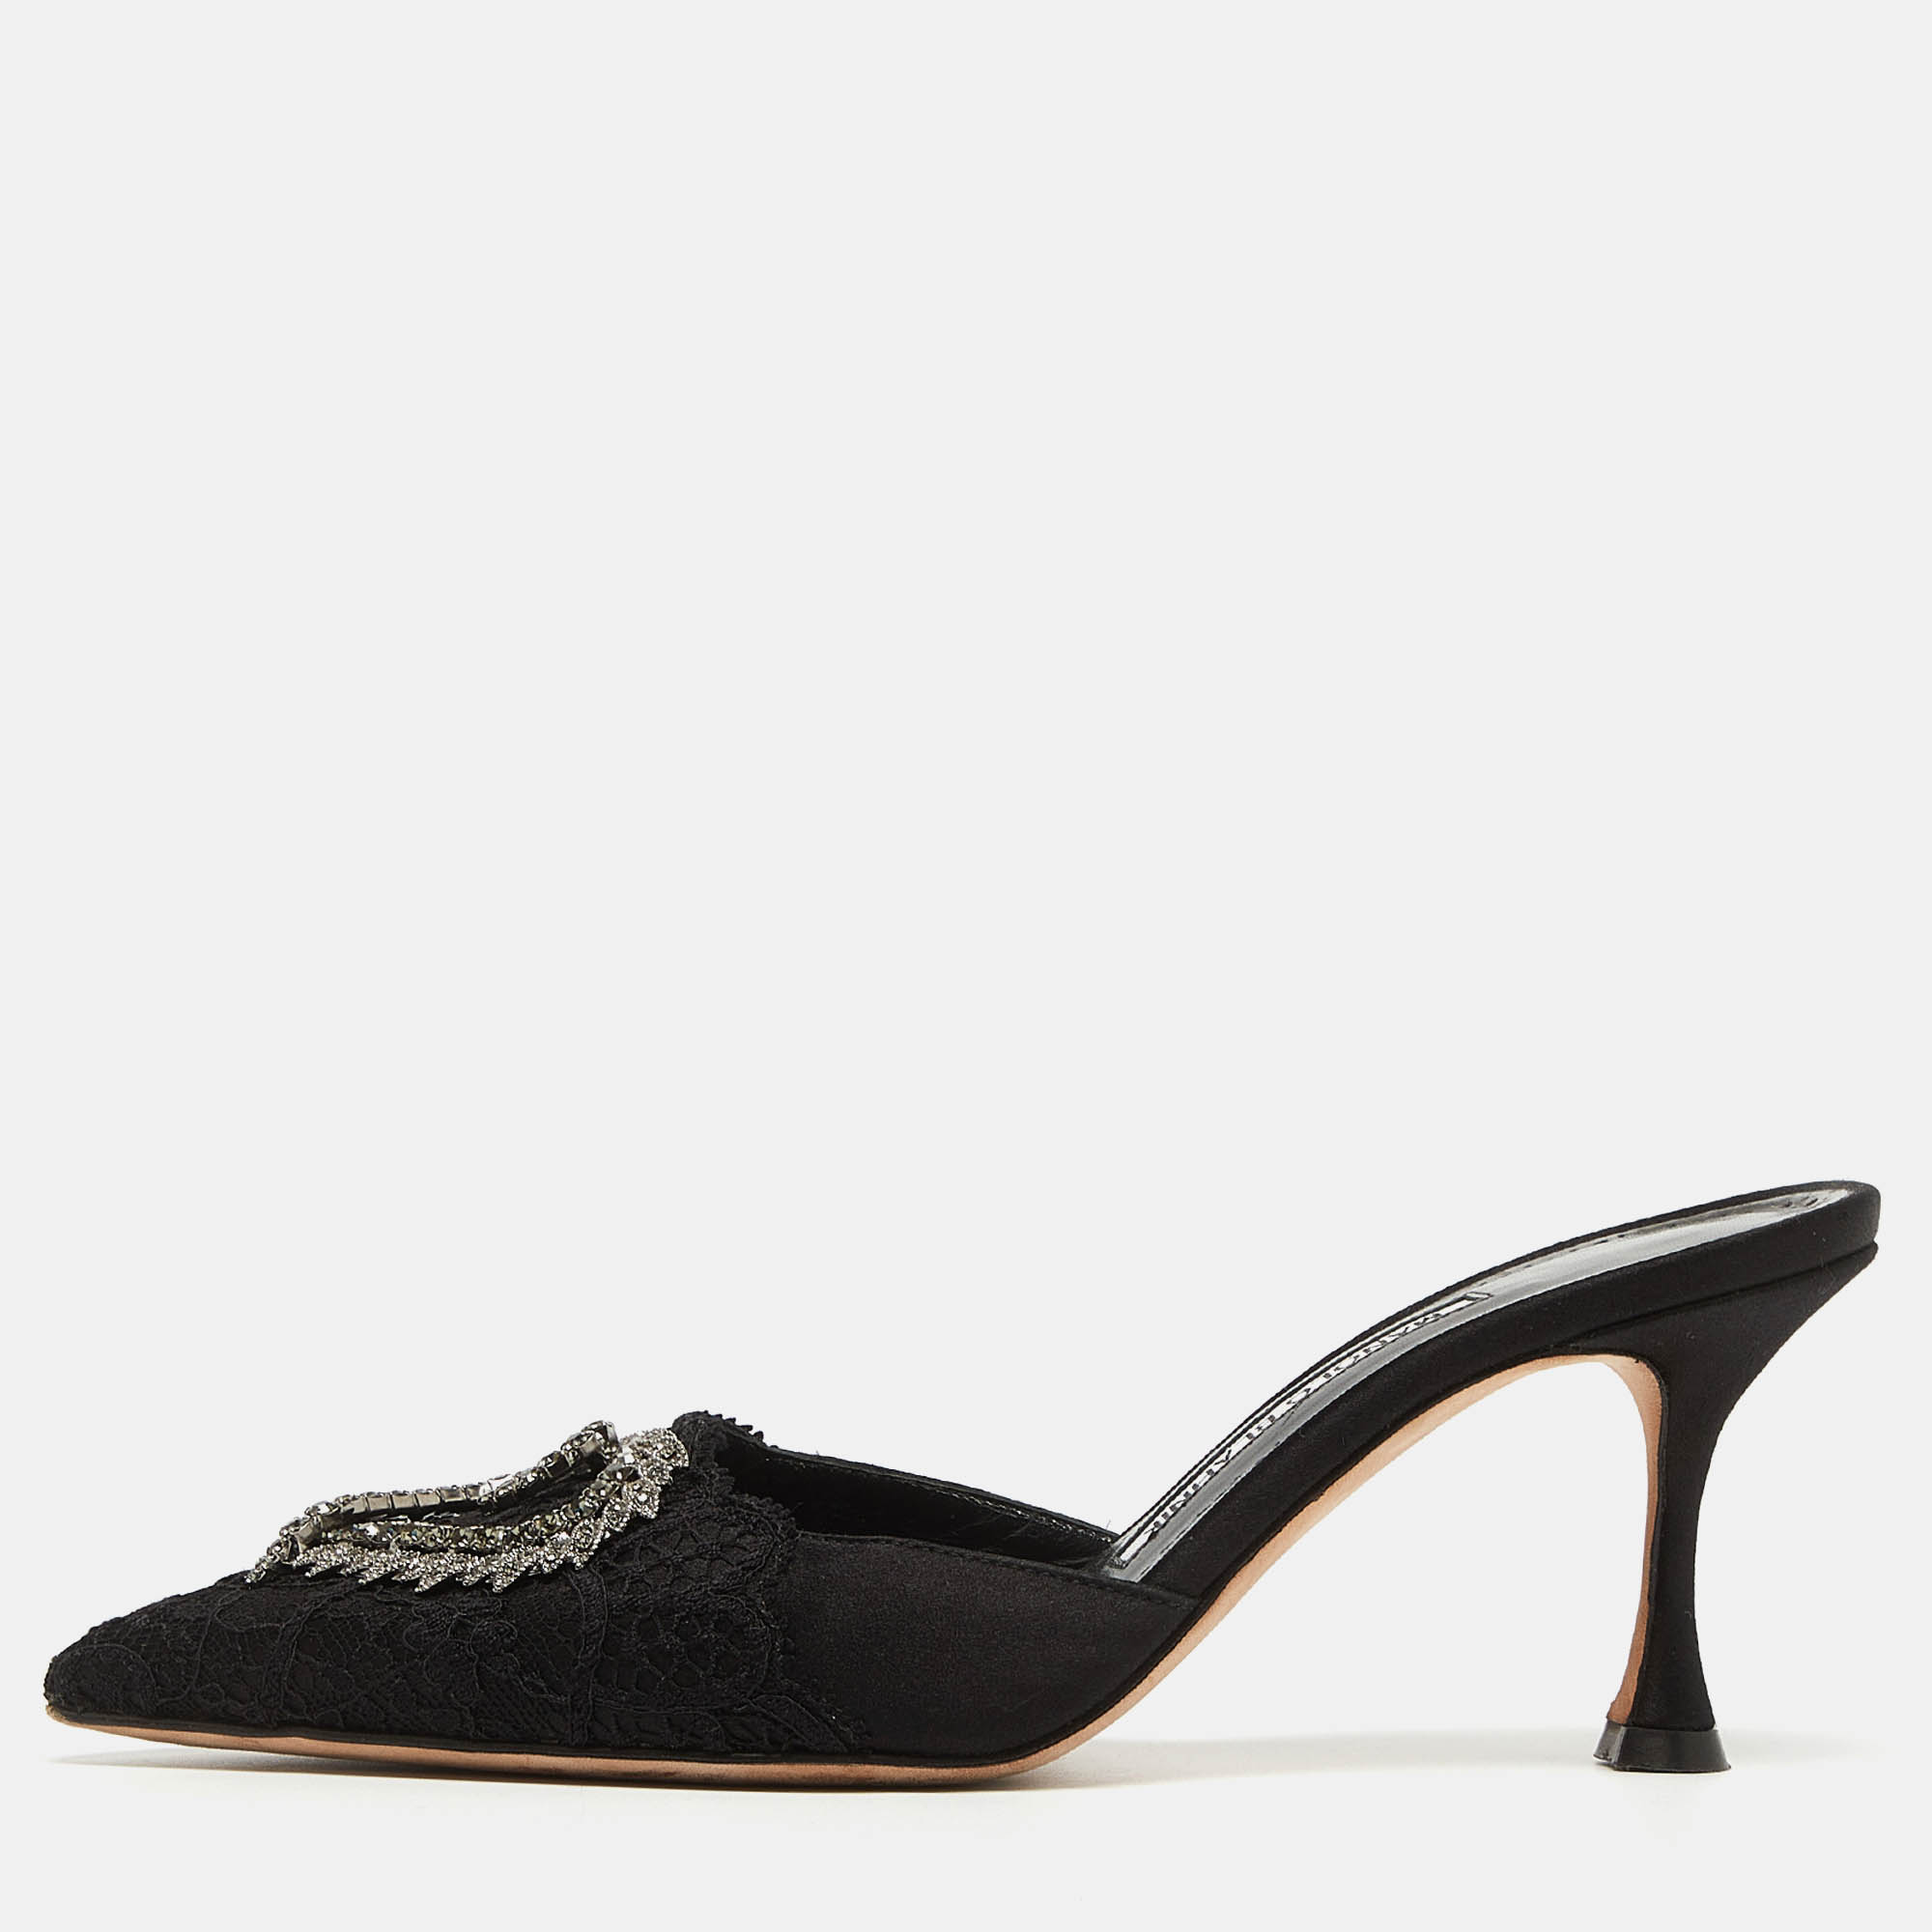 Manolo blahnik black satin and lace crystal embellished mule sandals size 37